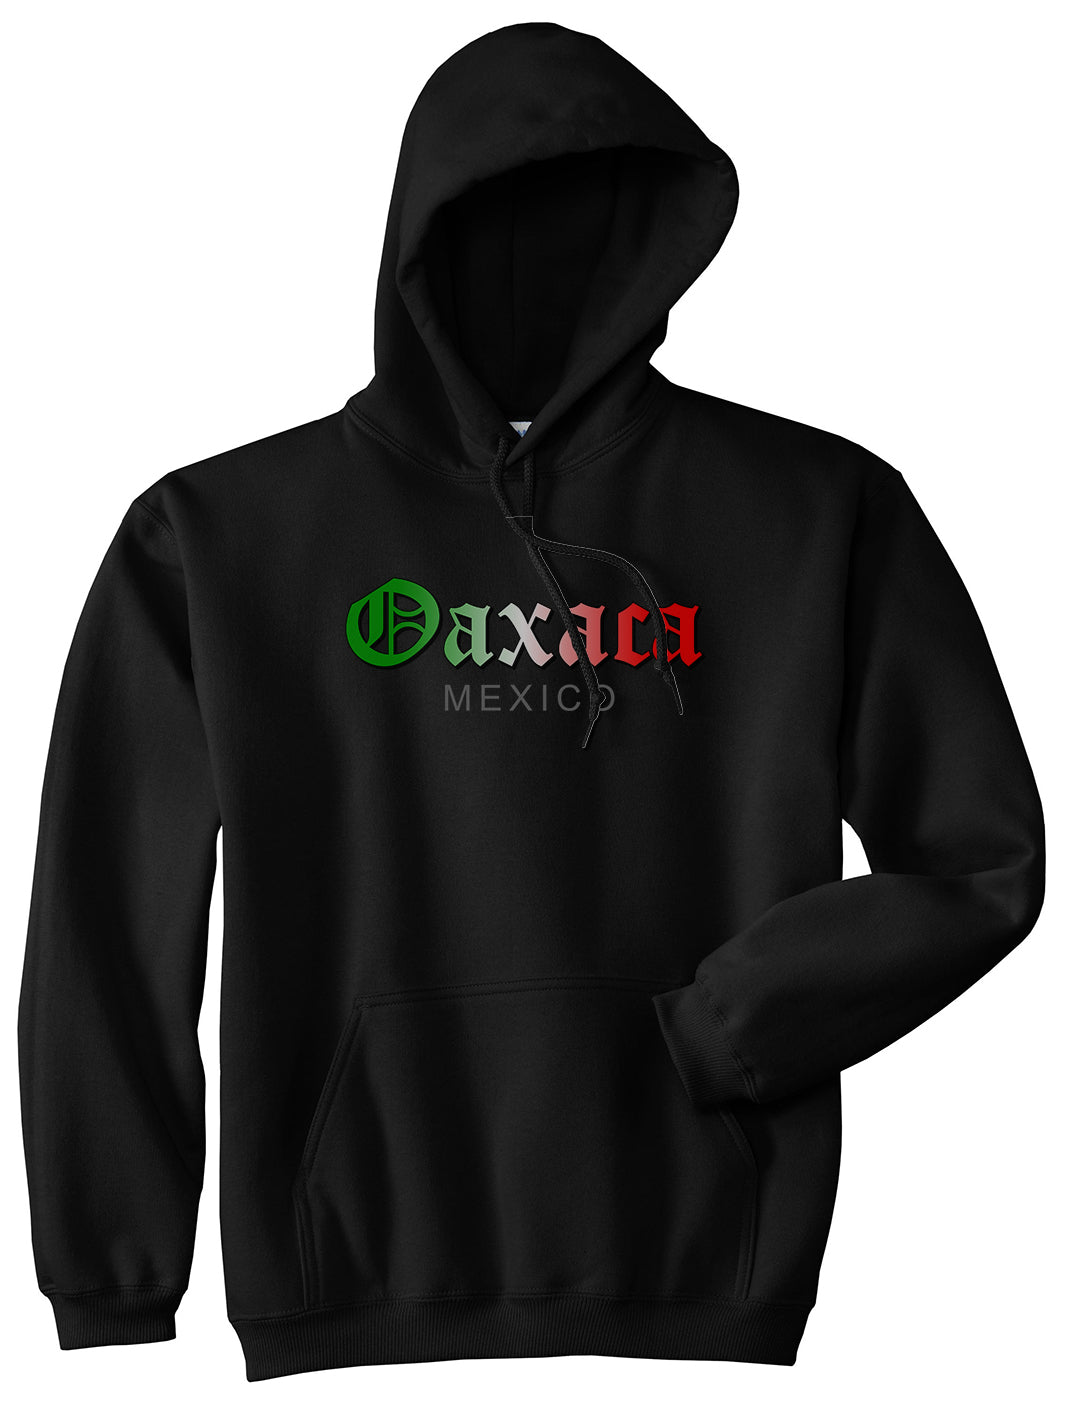 Oaxaca Mexico Mens Pullover Hoodie Black